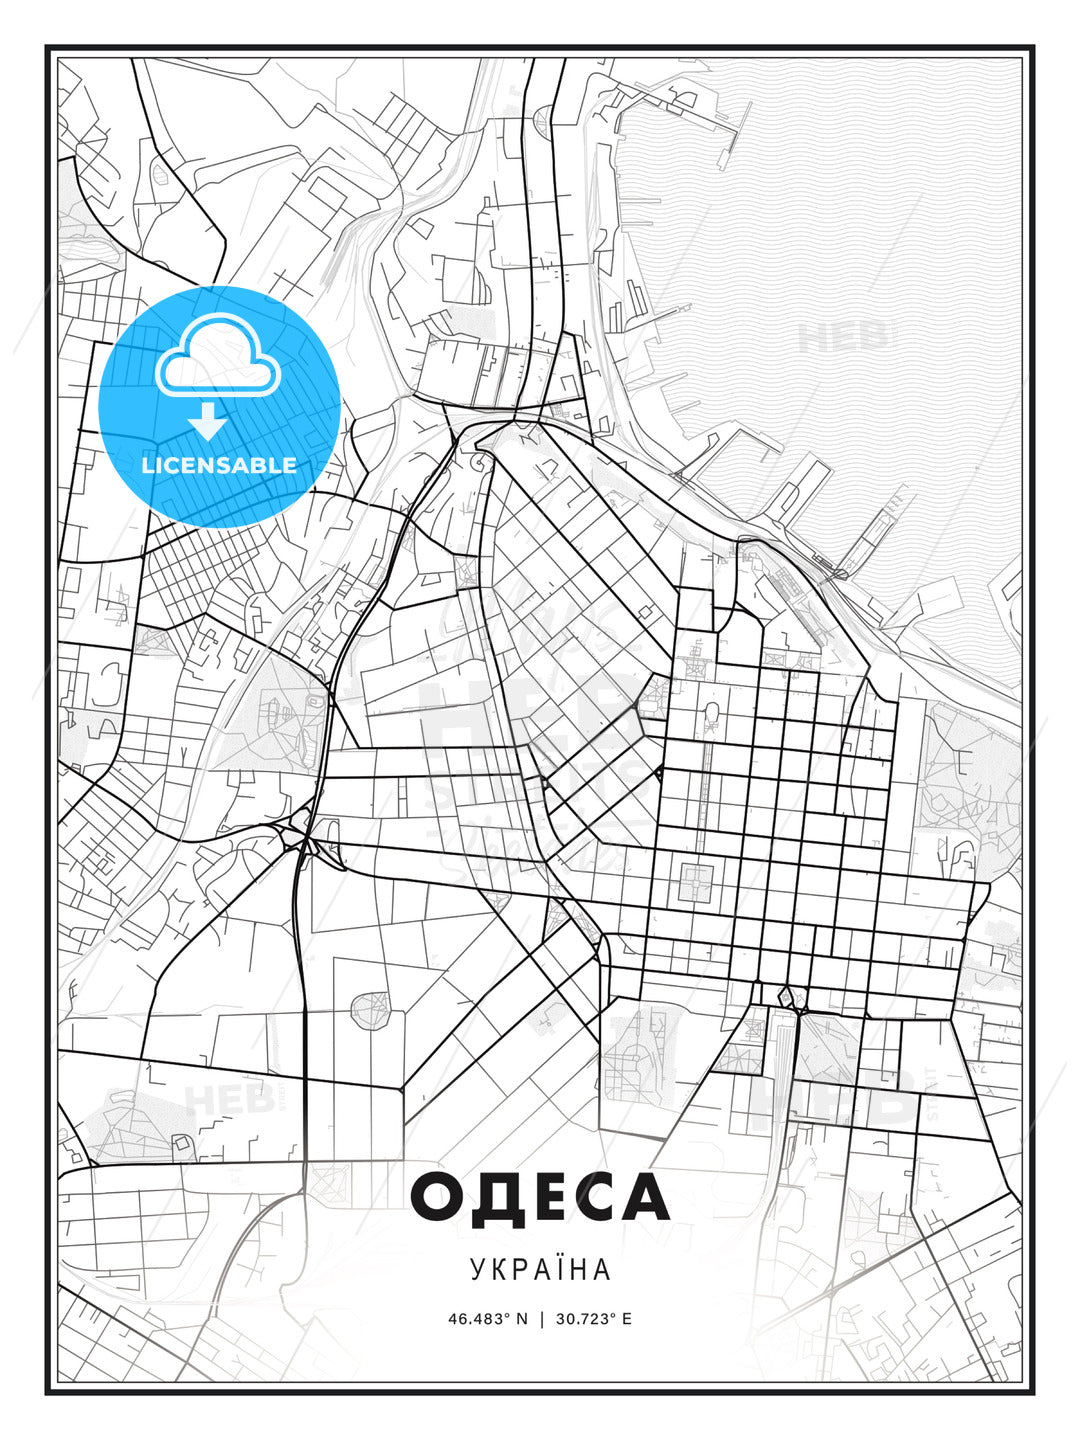 ОДЕСА / Odessa, Ukraine, Modern Print Template in Various Formats - HEBSTREITS Sketches